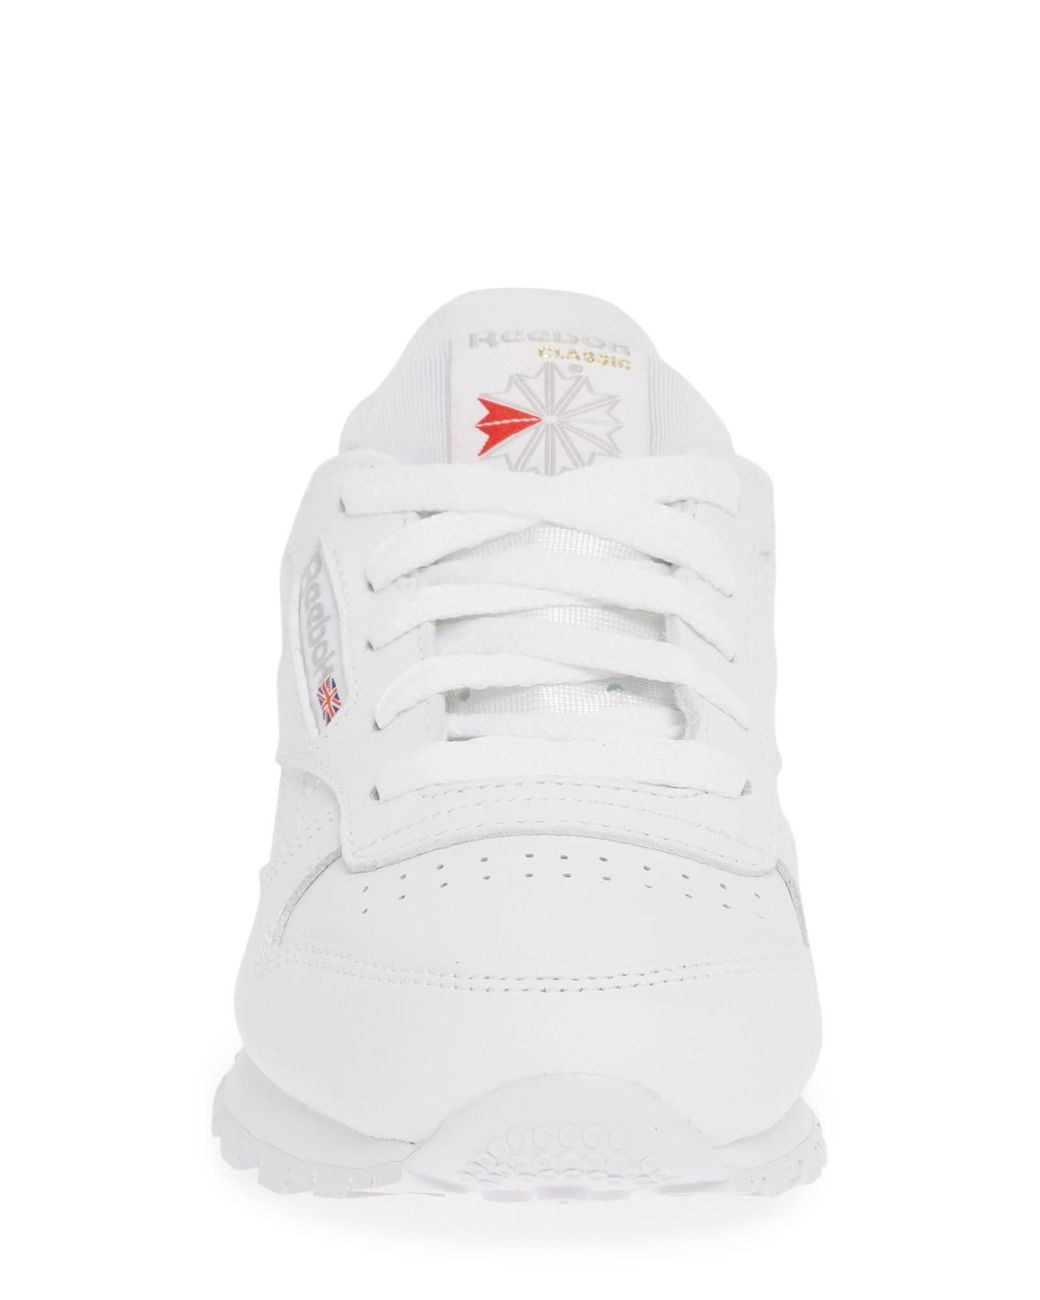 Reebok Classic Leather Sneaker in White | Lyst